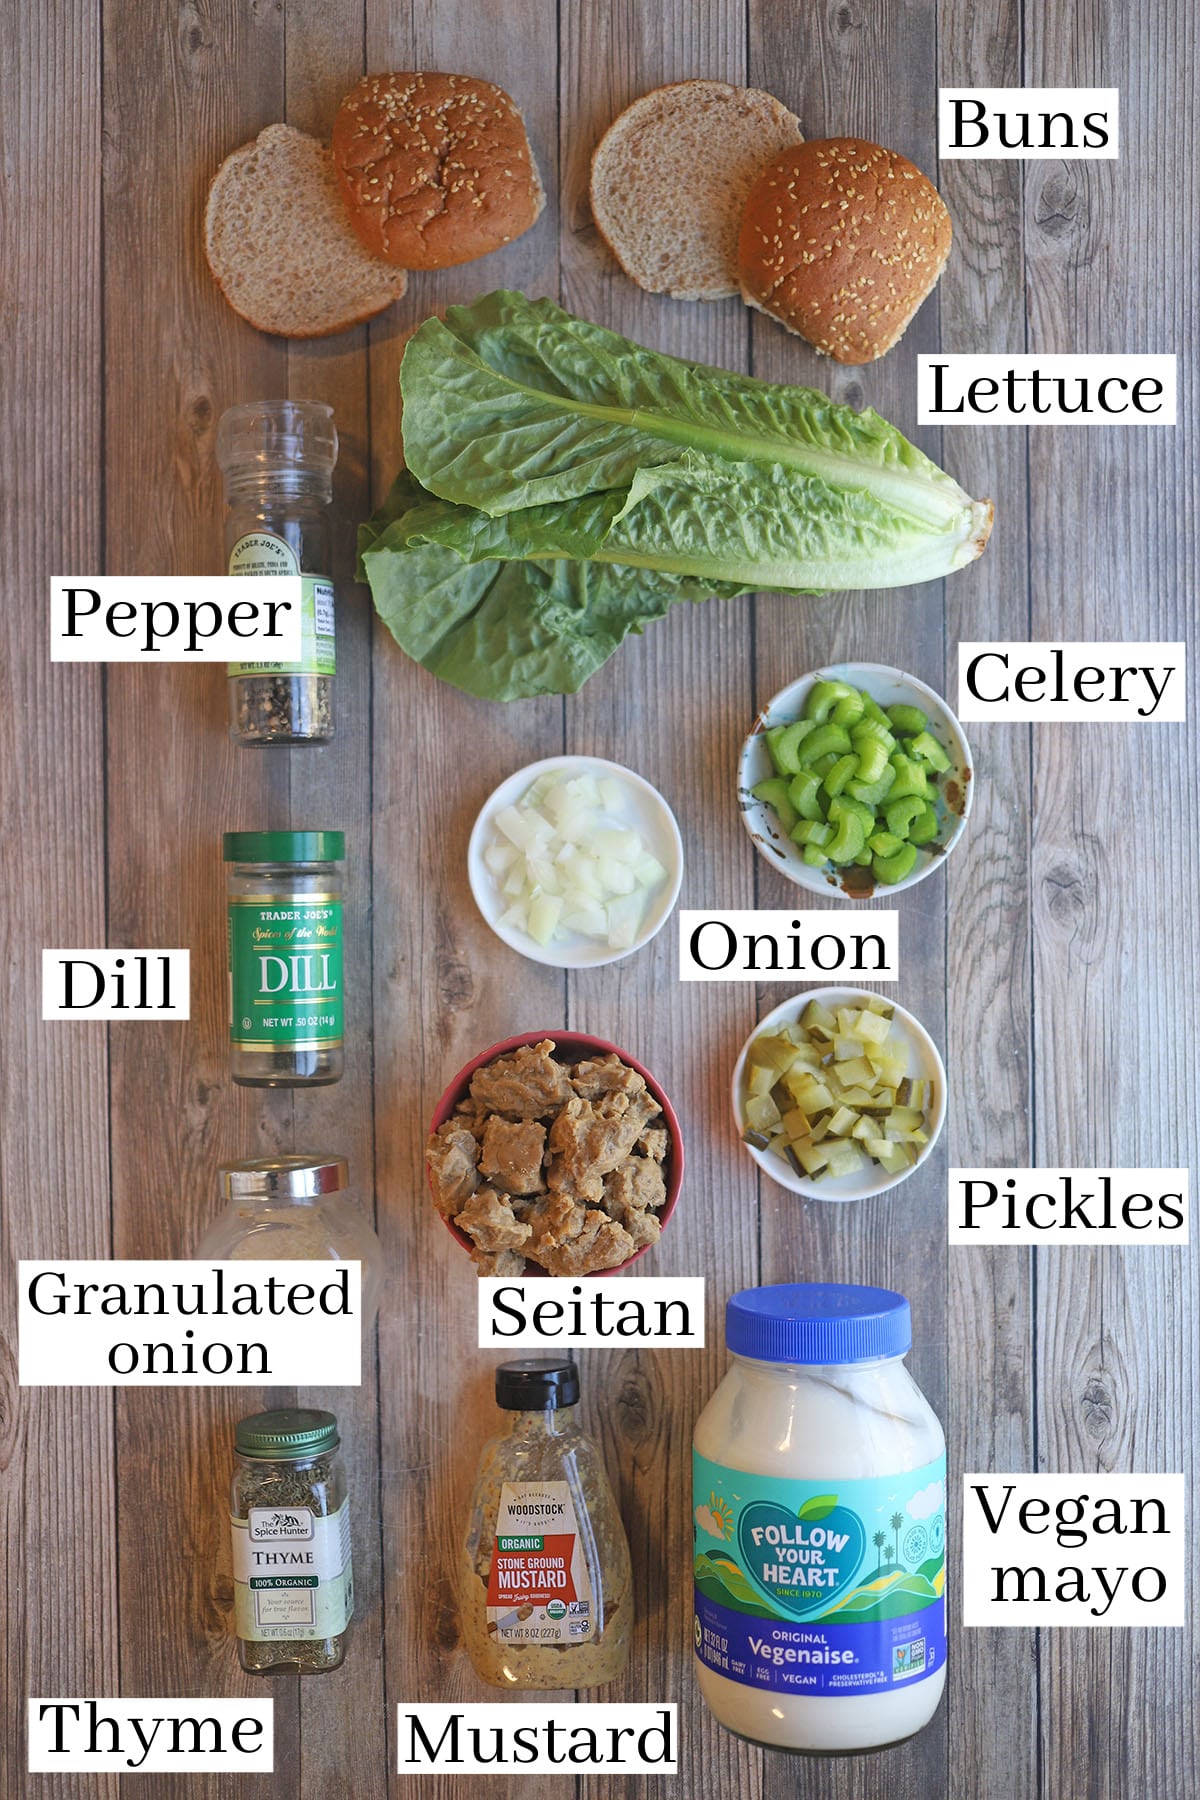 Labeled ingredients for vegan chicken salad sandwiches.